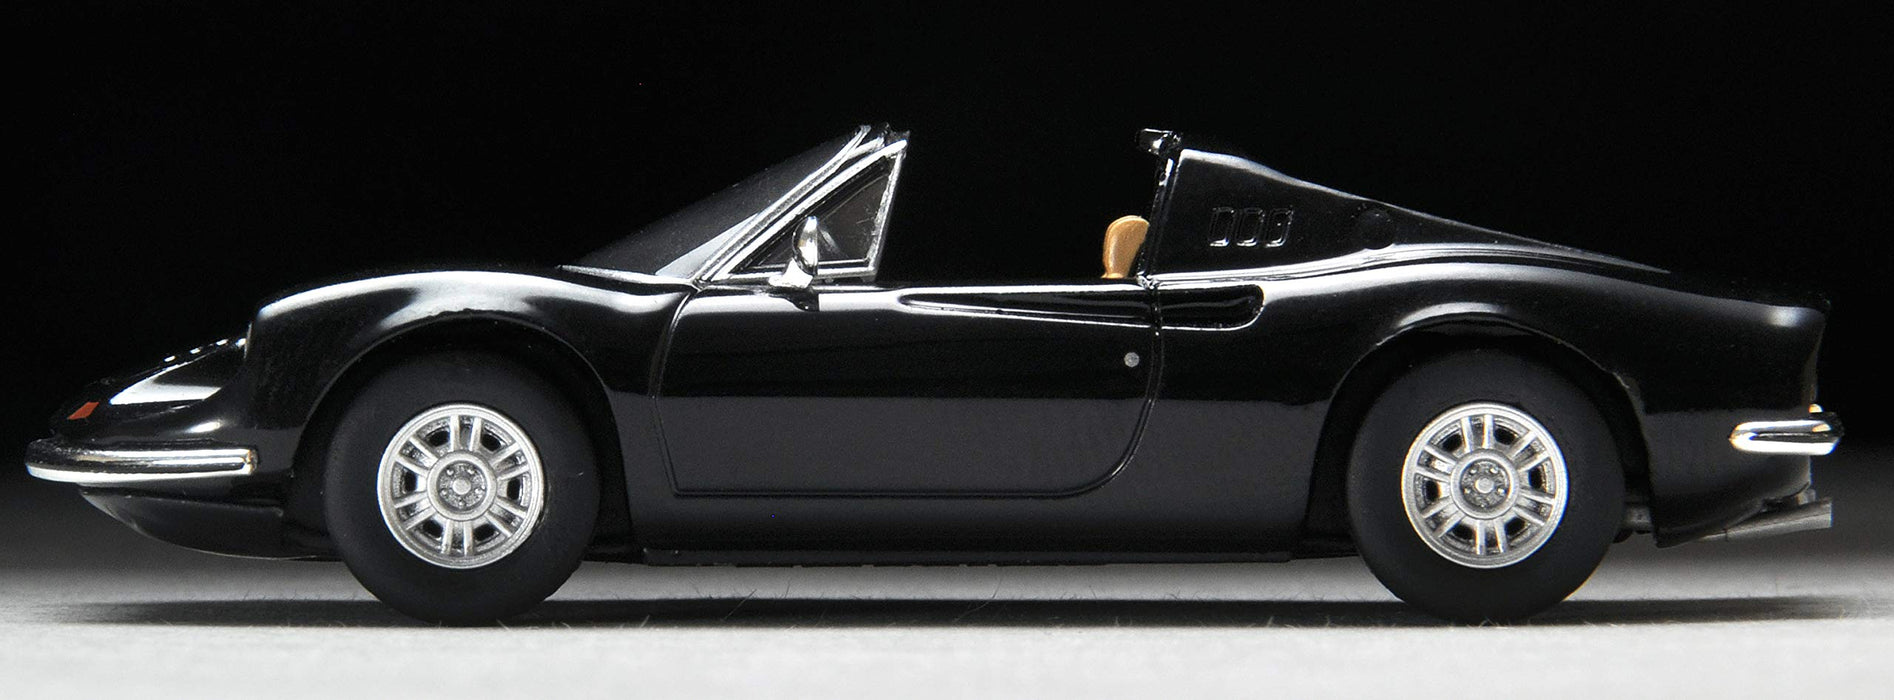 Tomytec Tomica Limited Vintage Black 1/64 Scale Tlv Dino 246Gts Finished Model